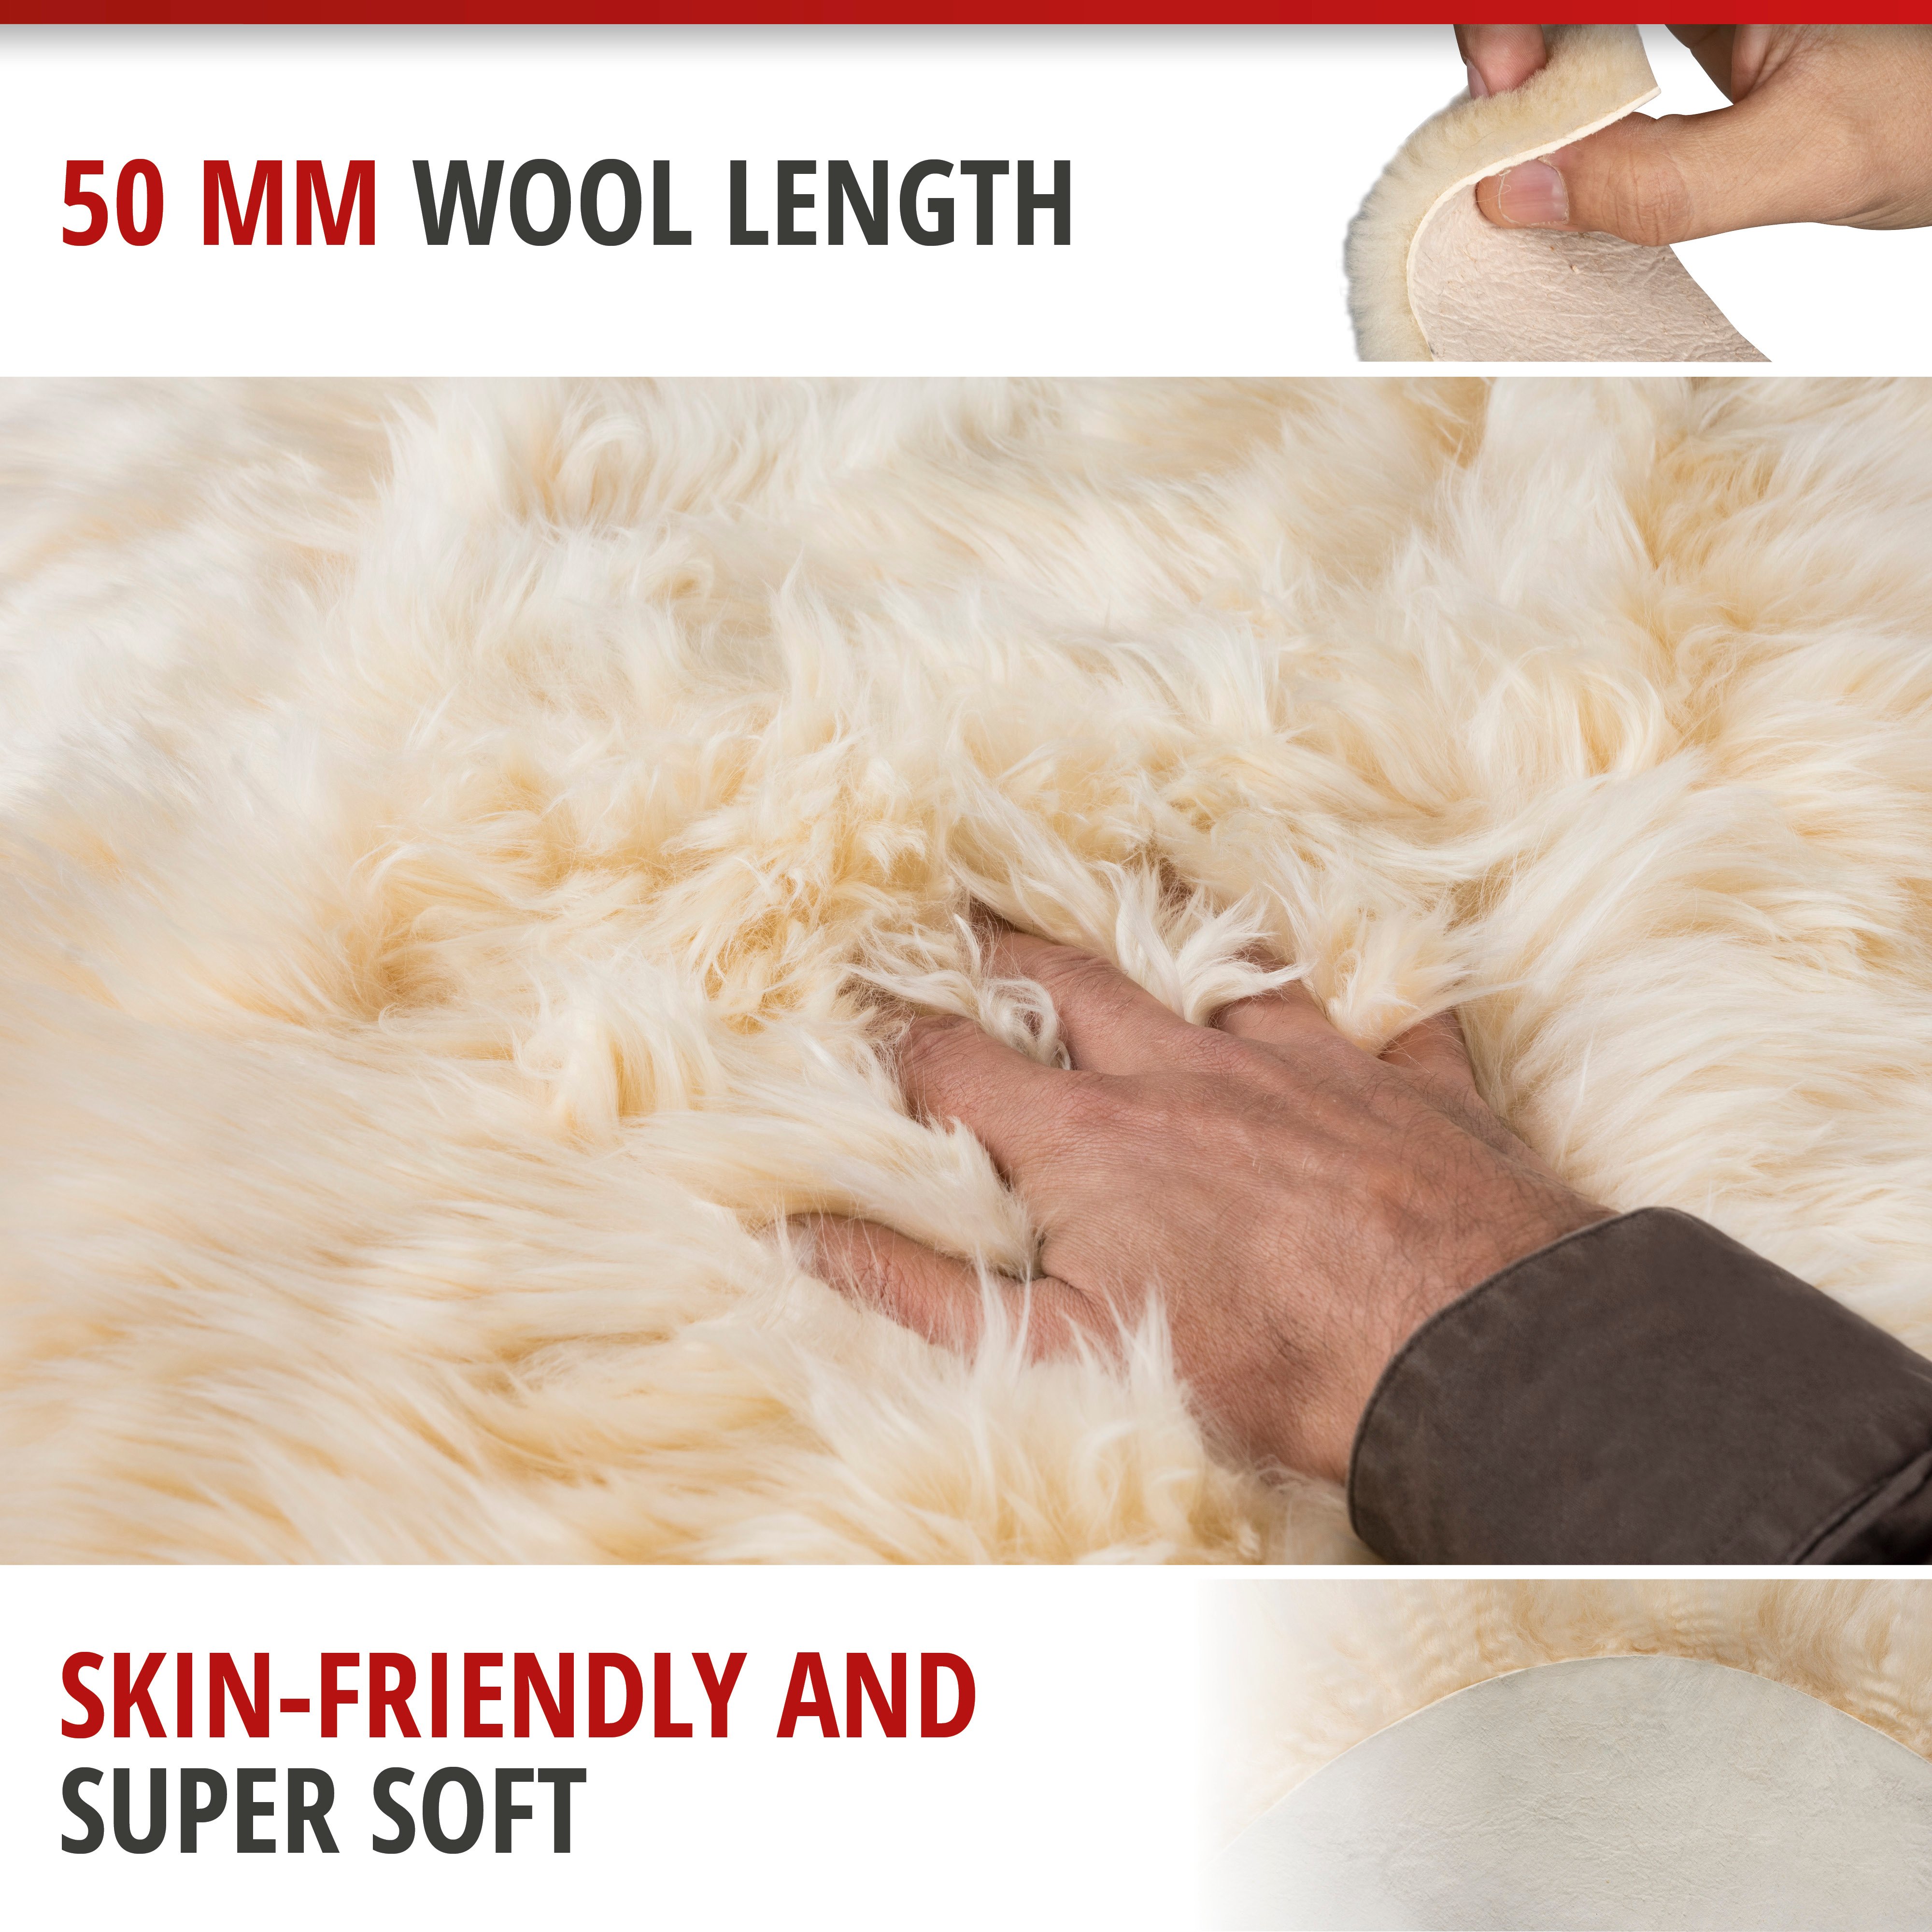 Lambskin rug Blake beige 80-90cm made of 100% natural lambskin, wool height 50mm, ideal in living room & bedroom